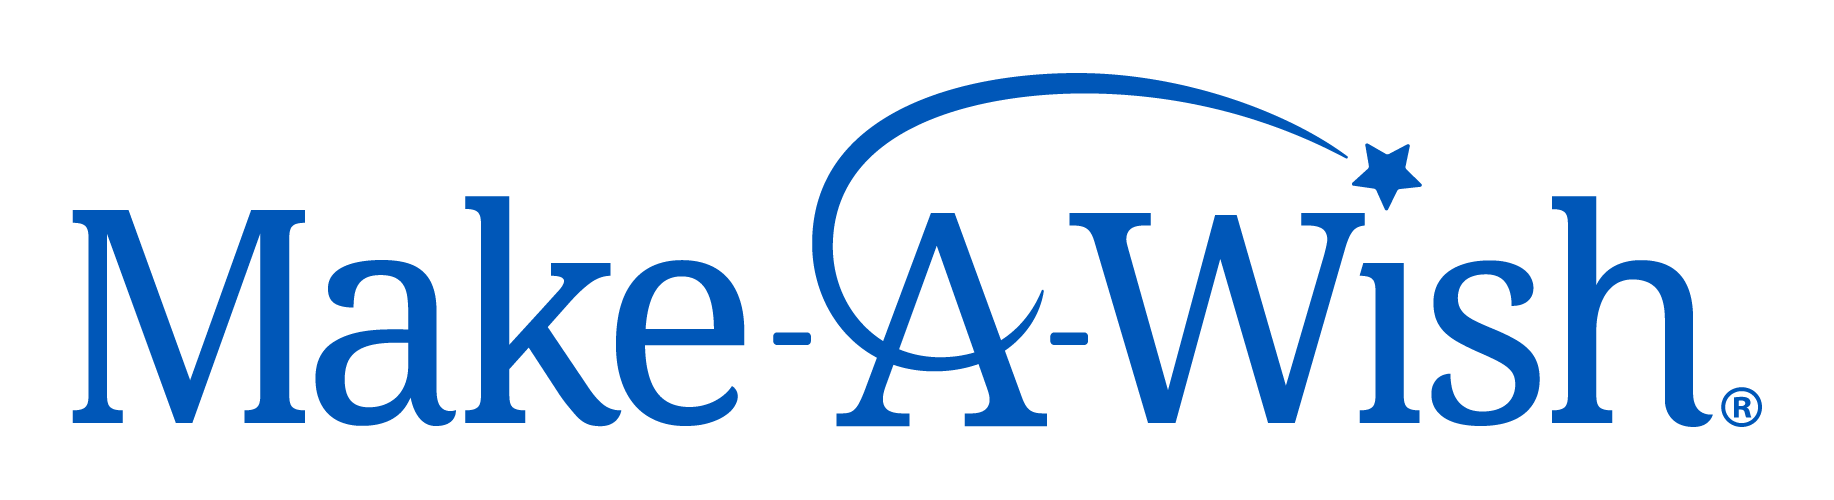 make-a-wish foundation logo